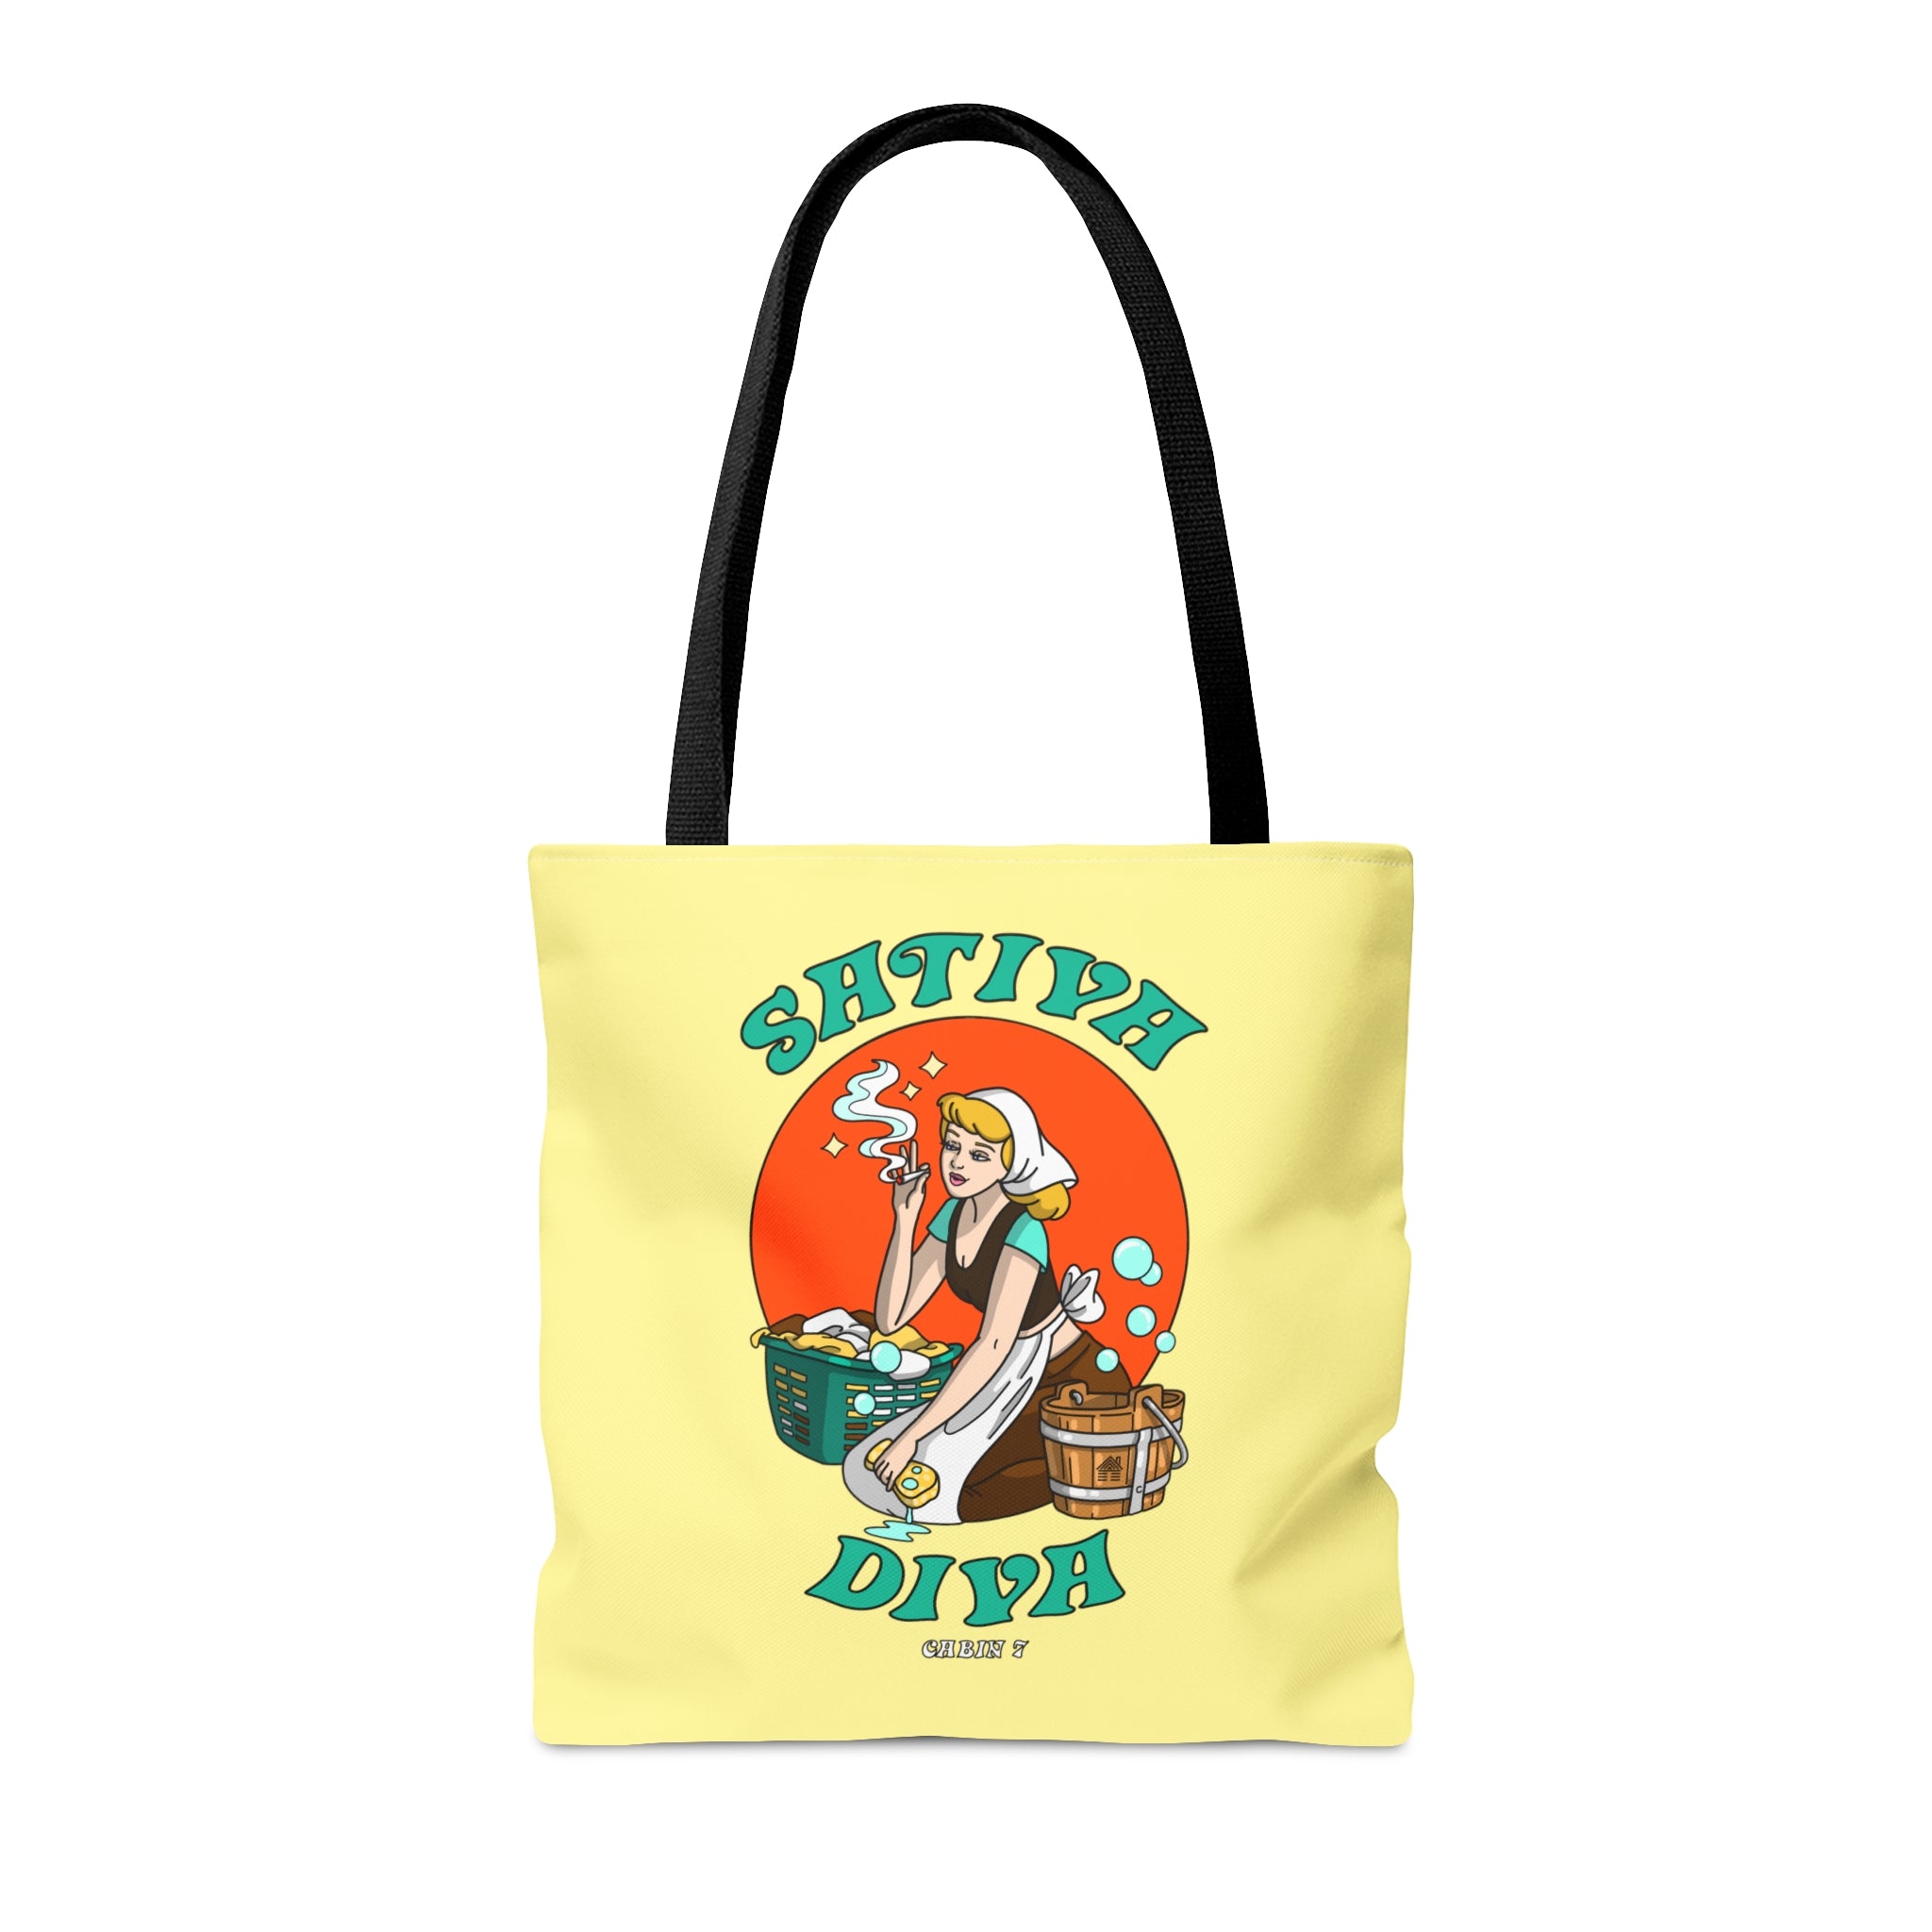 Sativa Diva Tote Bag